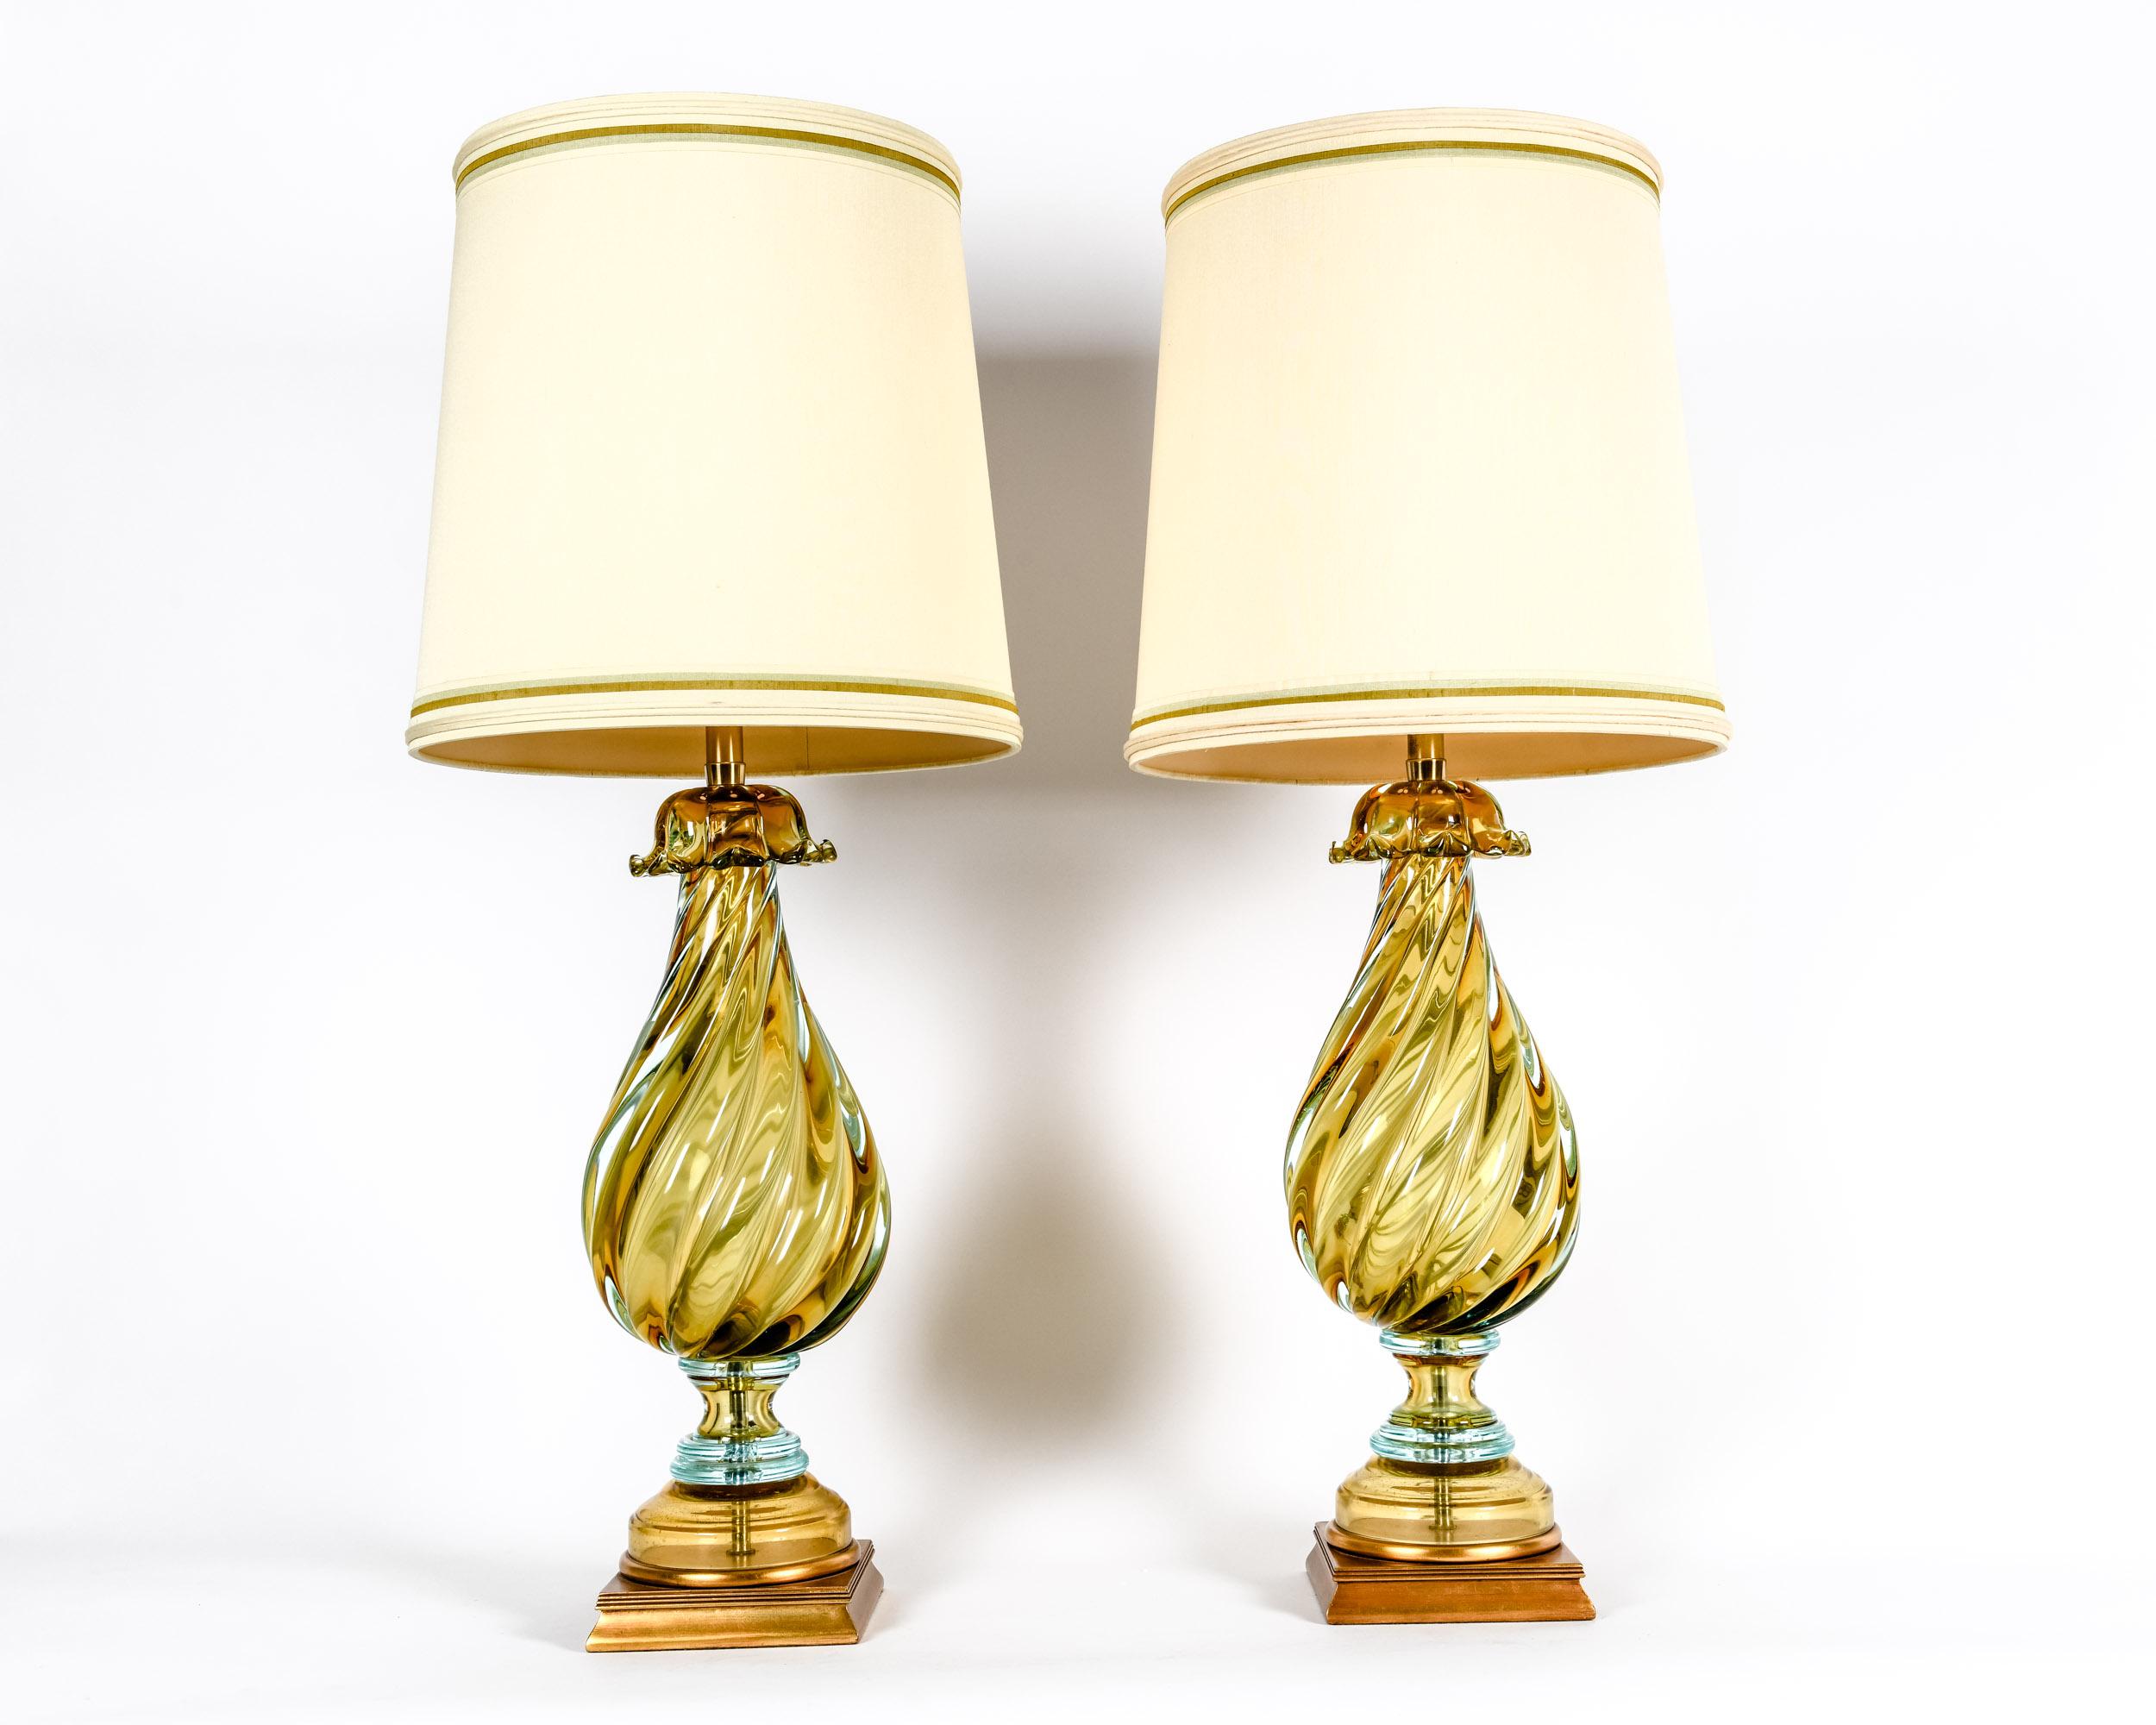 20th century lamps